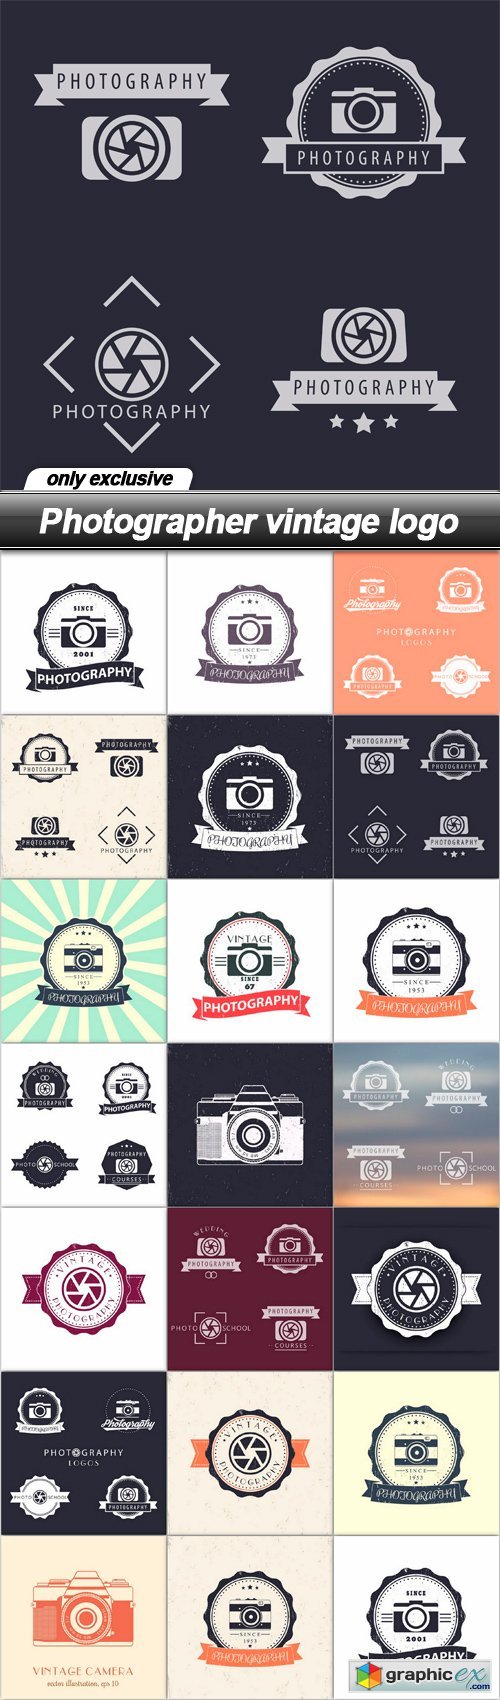 Photographer vintage logo - 20 EPS